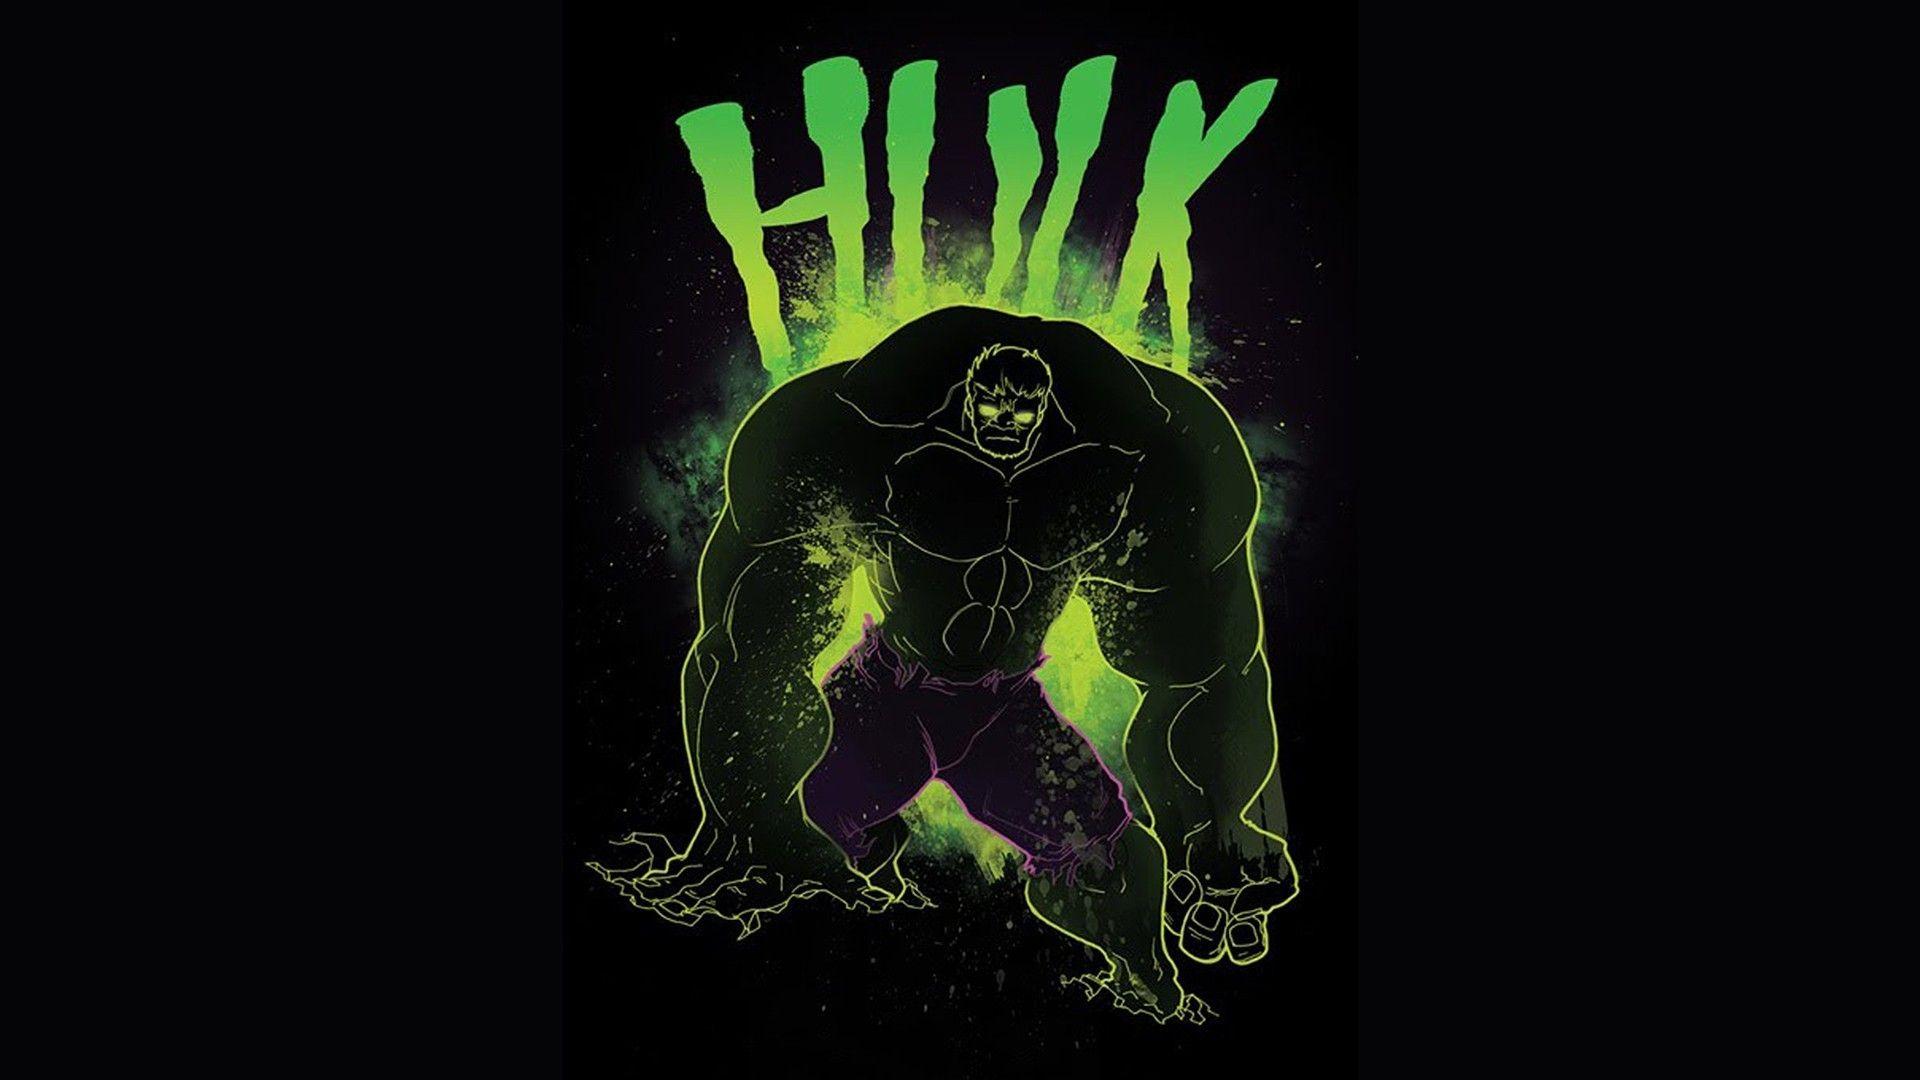 Hulk marvel comics black background fan art wallpaper. AllWallpaper